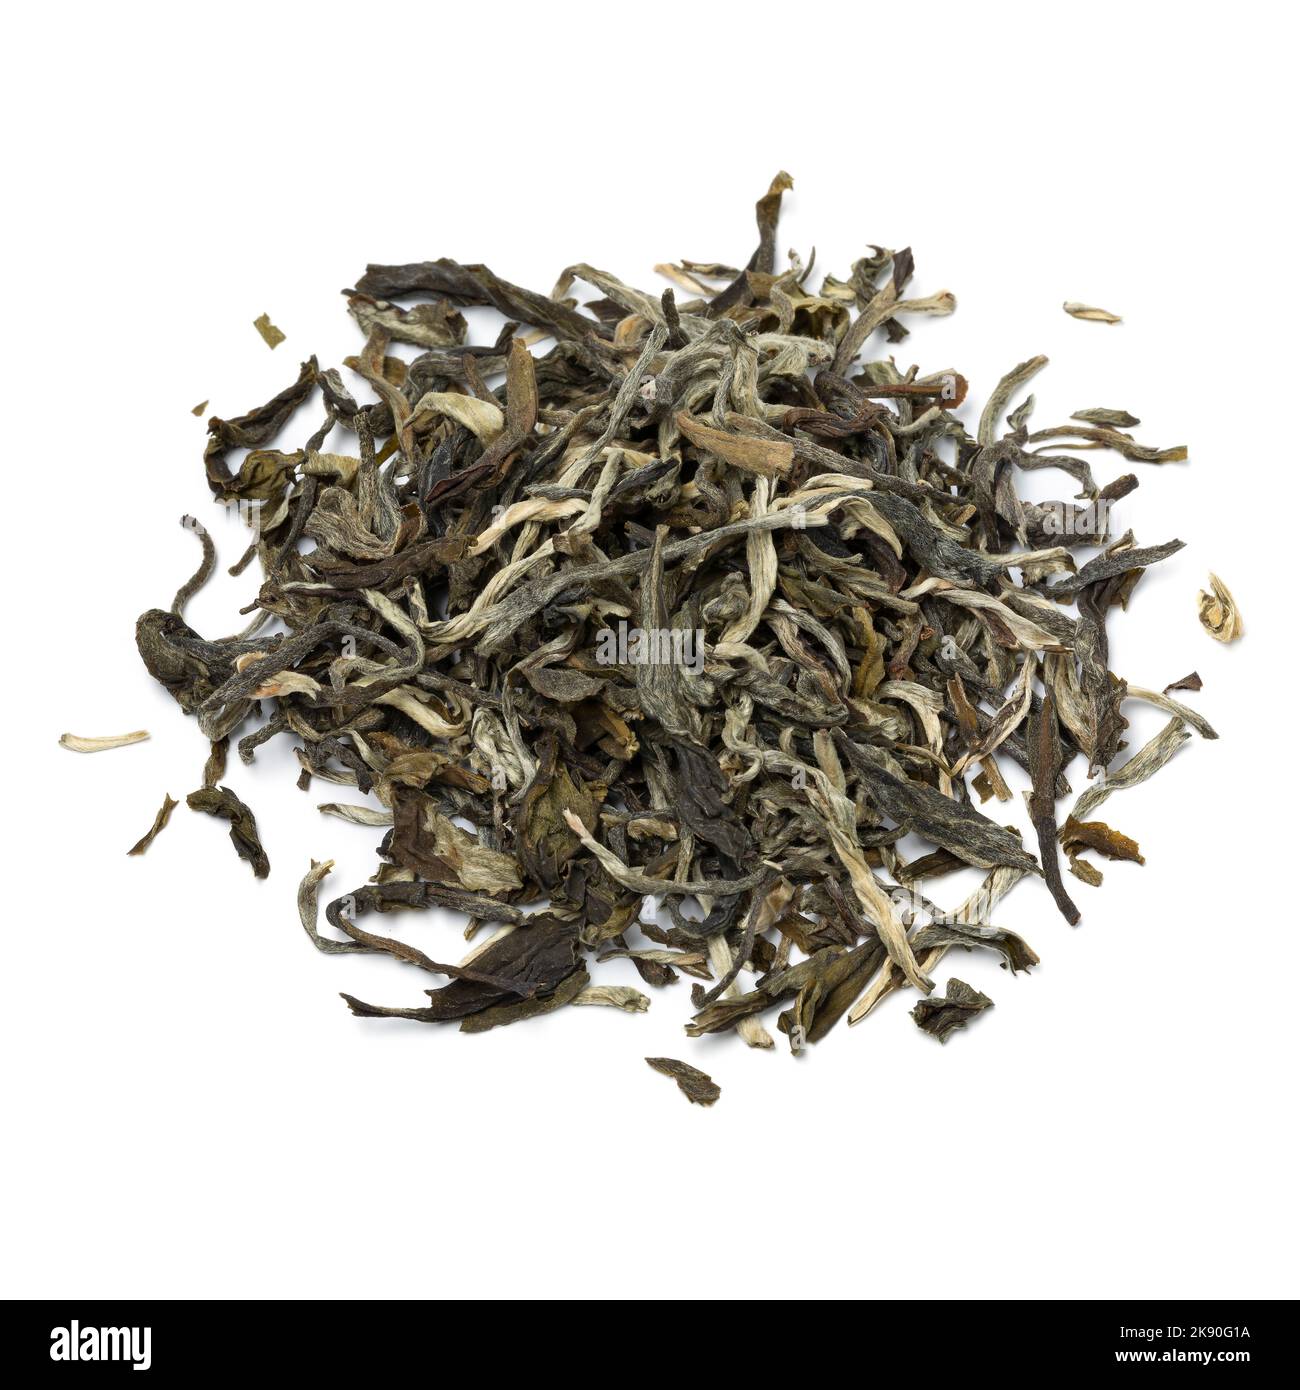 Heap of Bai Mao Hou, White Monkey dried tea leaves close up isolated on white background Stock Photo